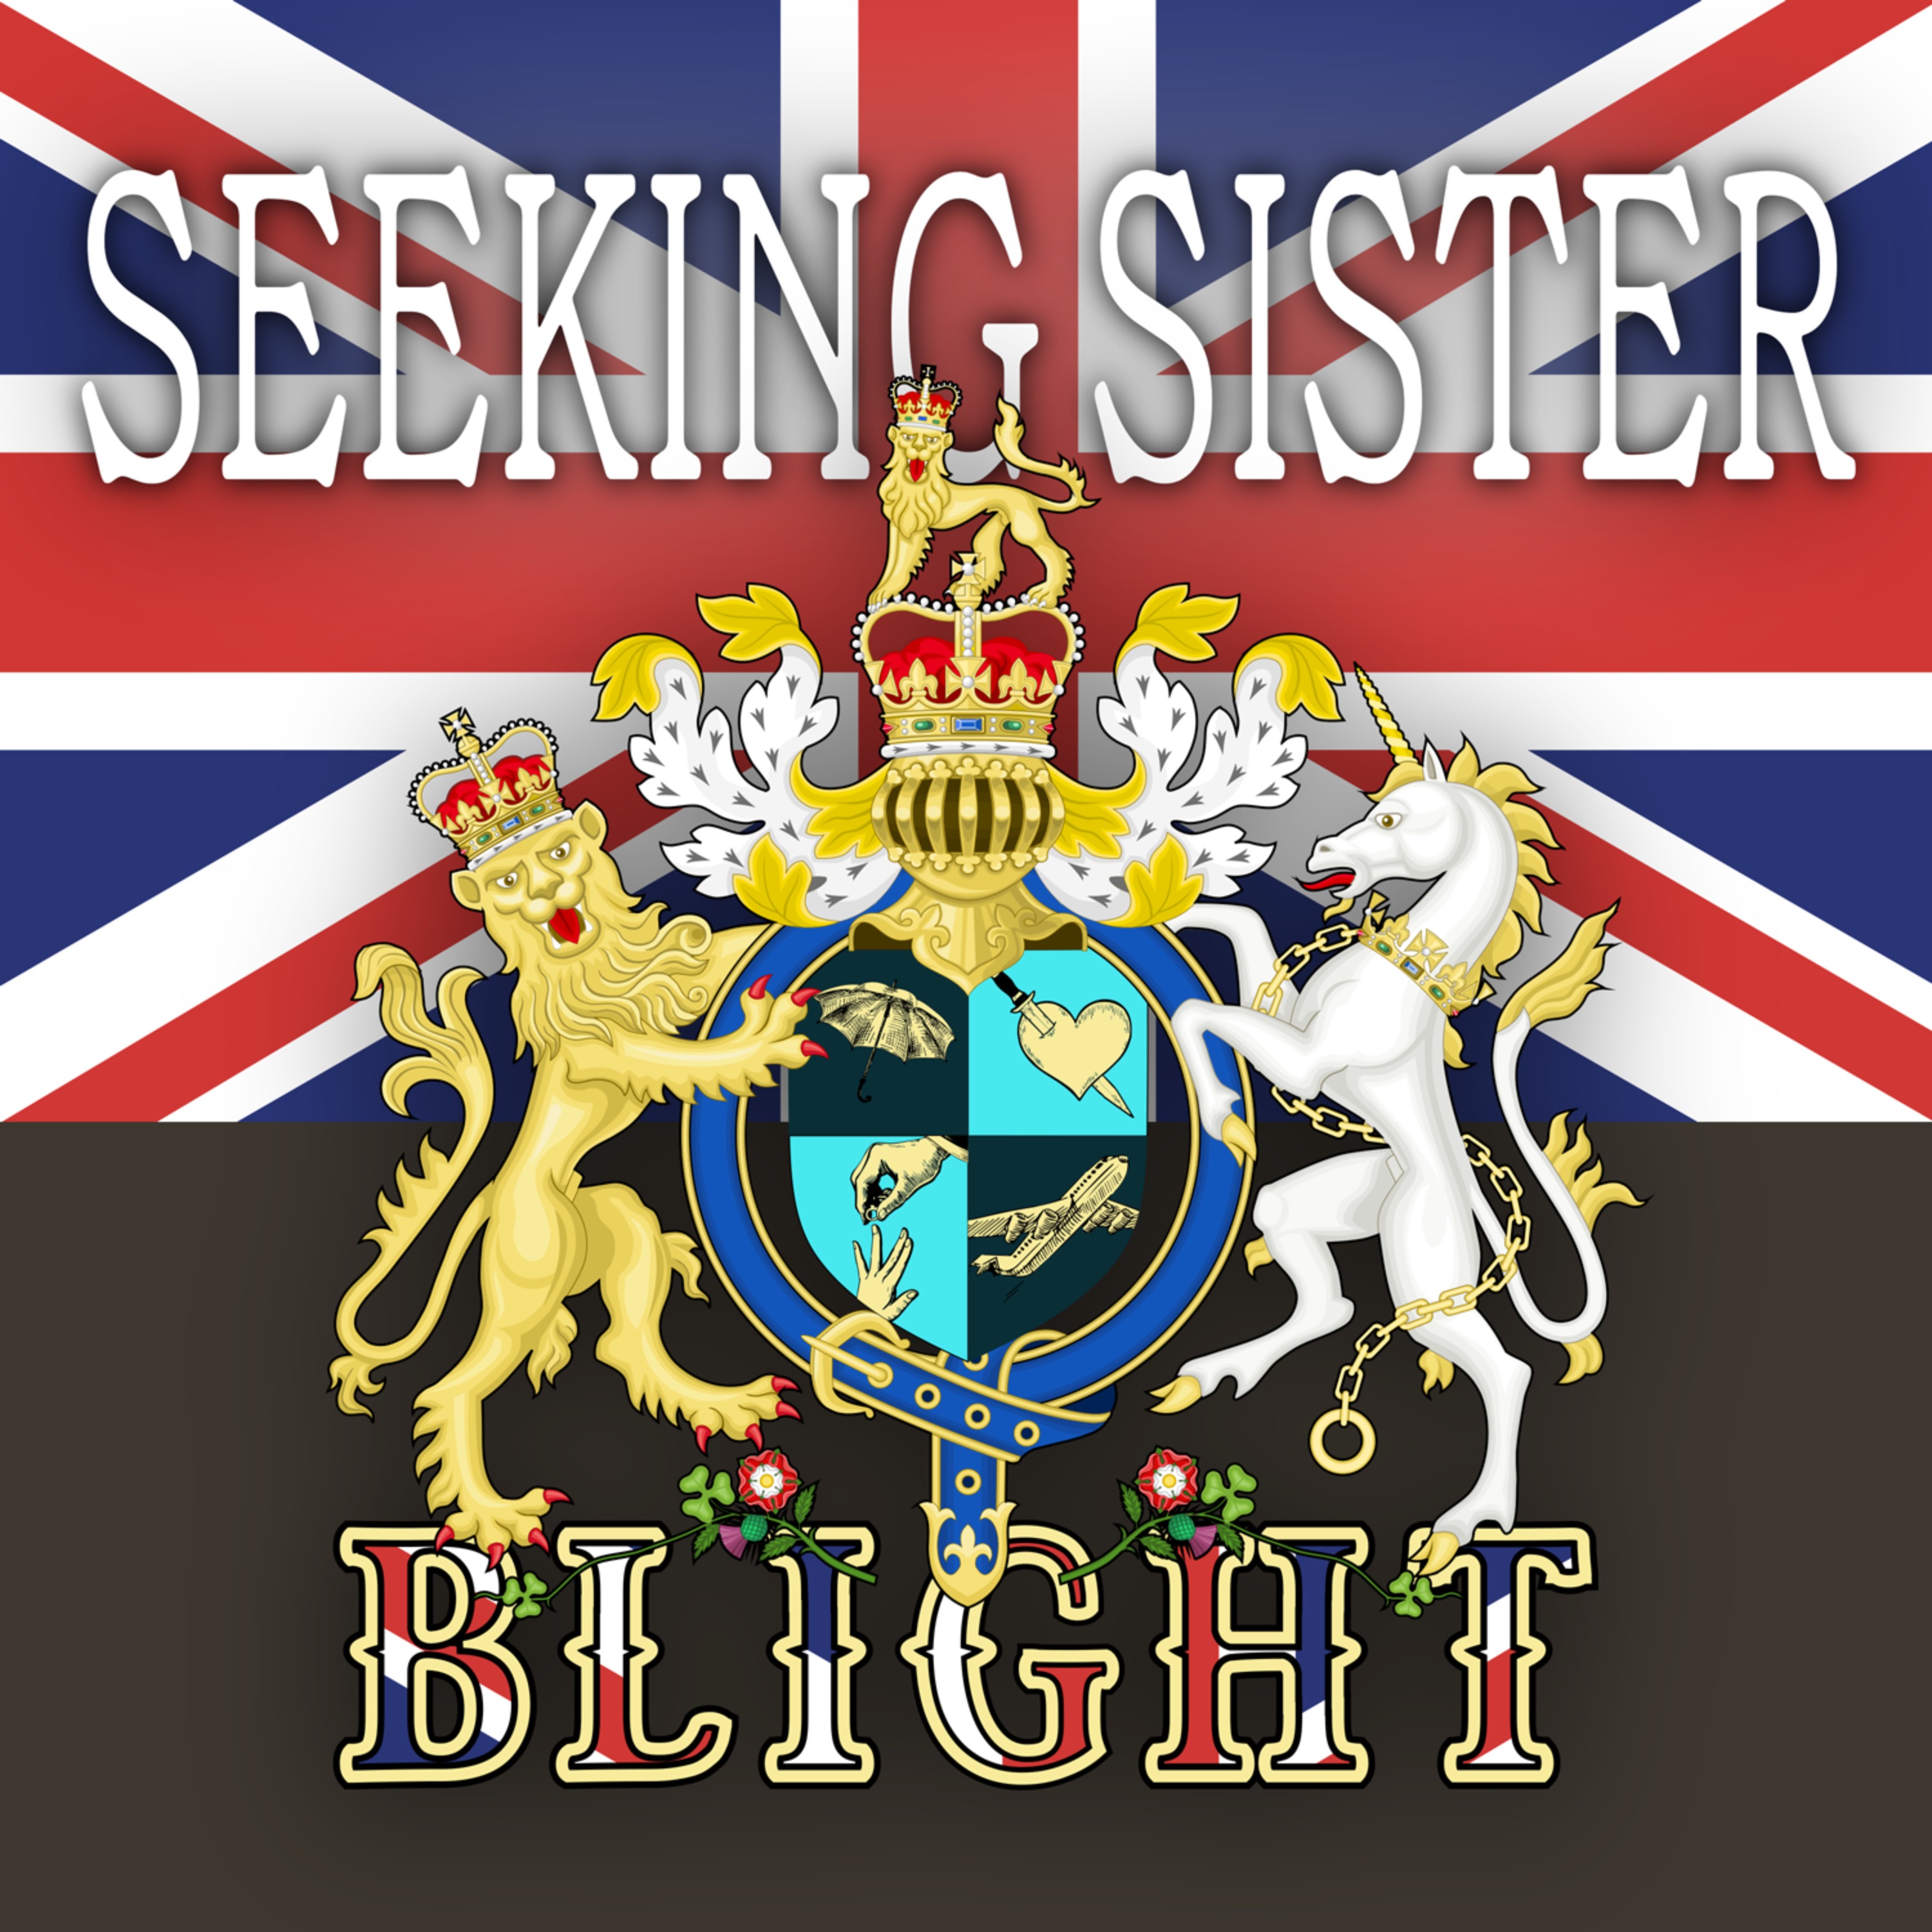 cover art for Seeking Sister Wife s5e4 - "Seeking the Truth"